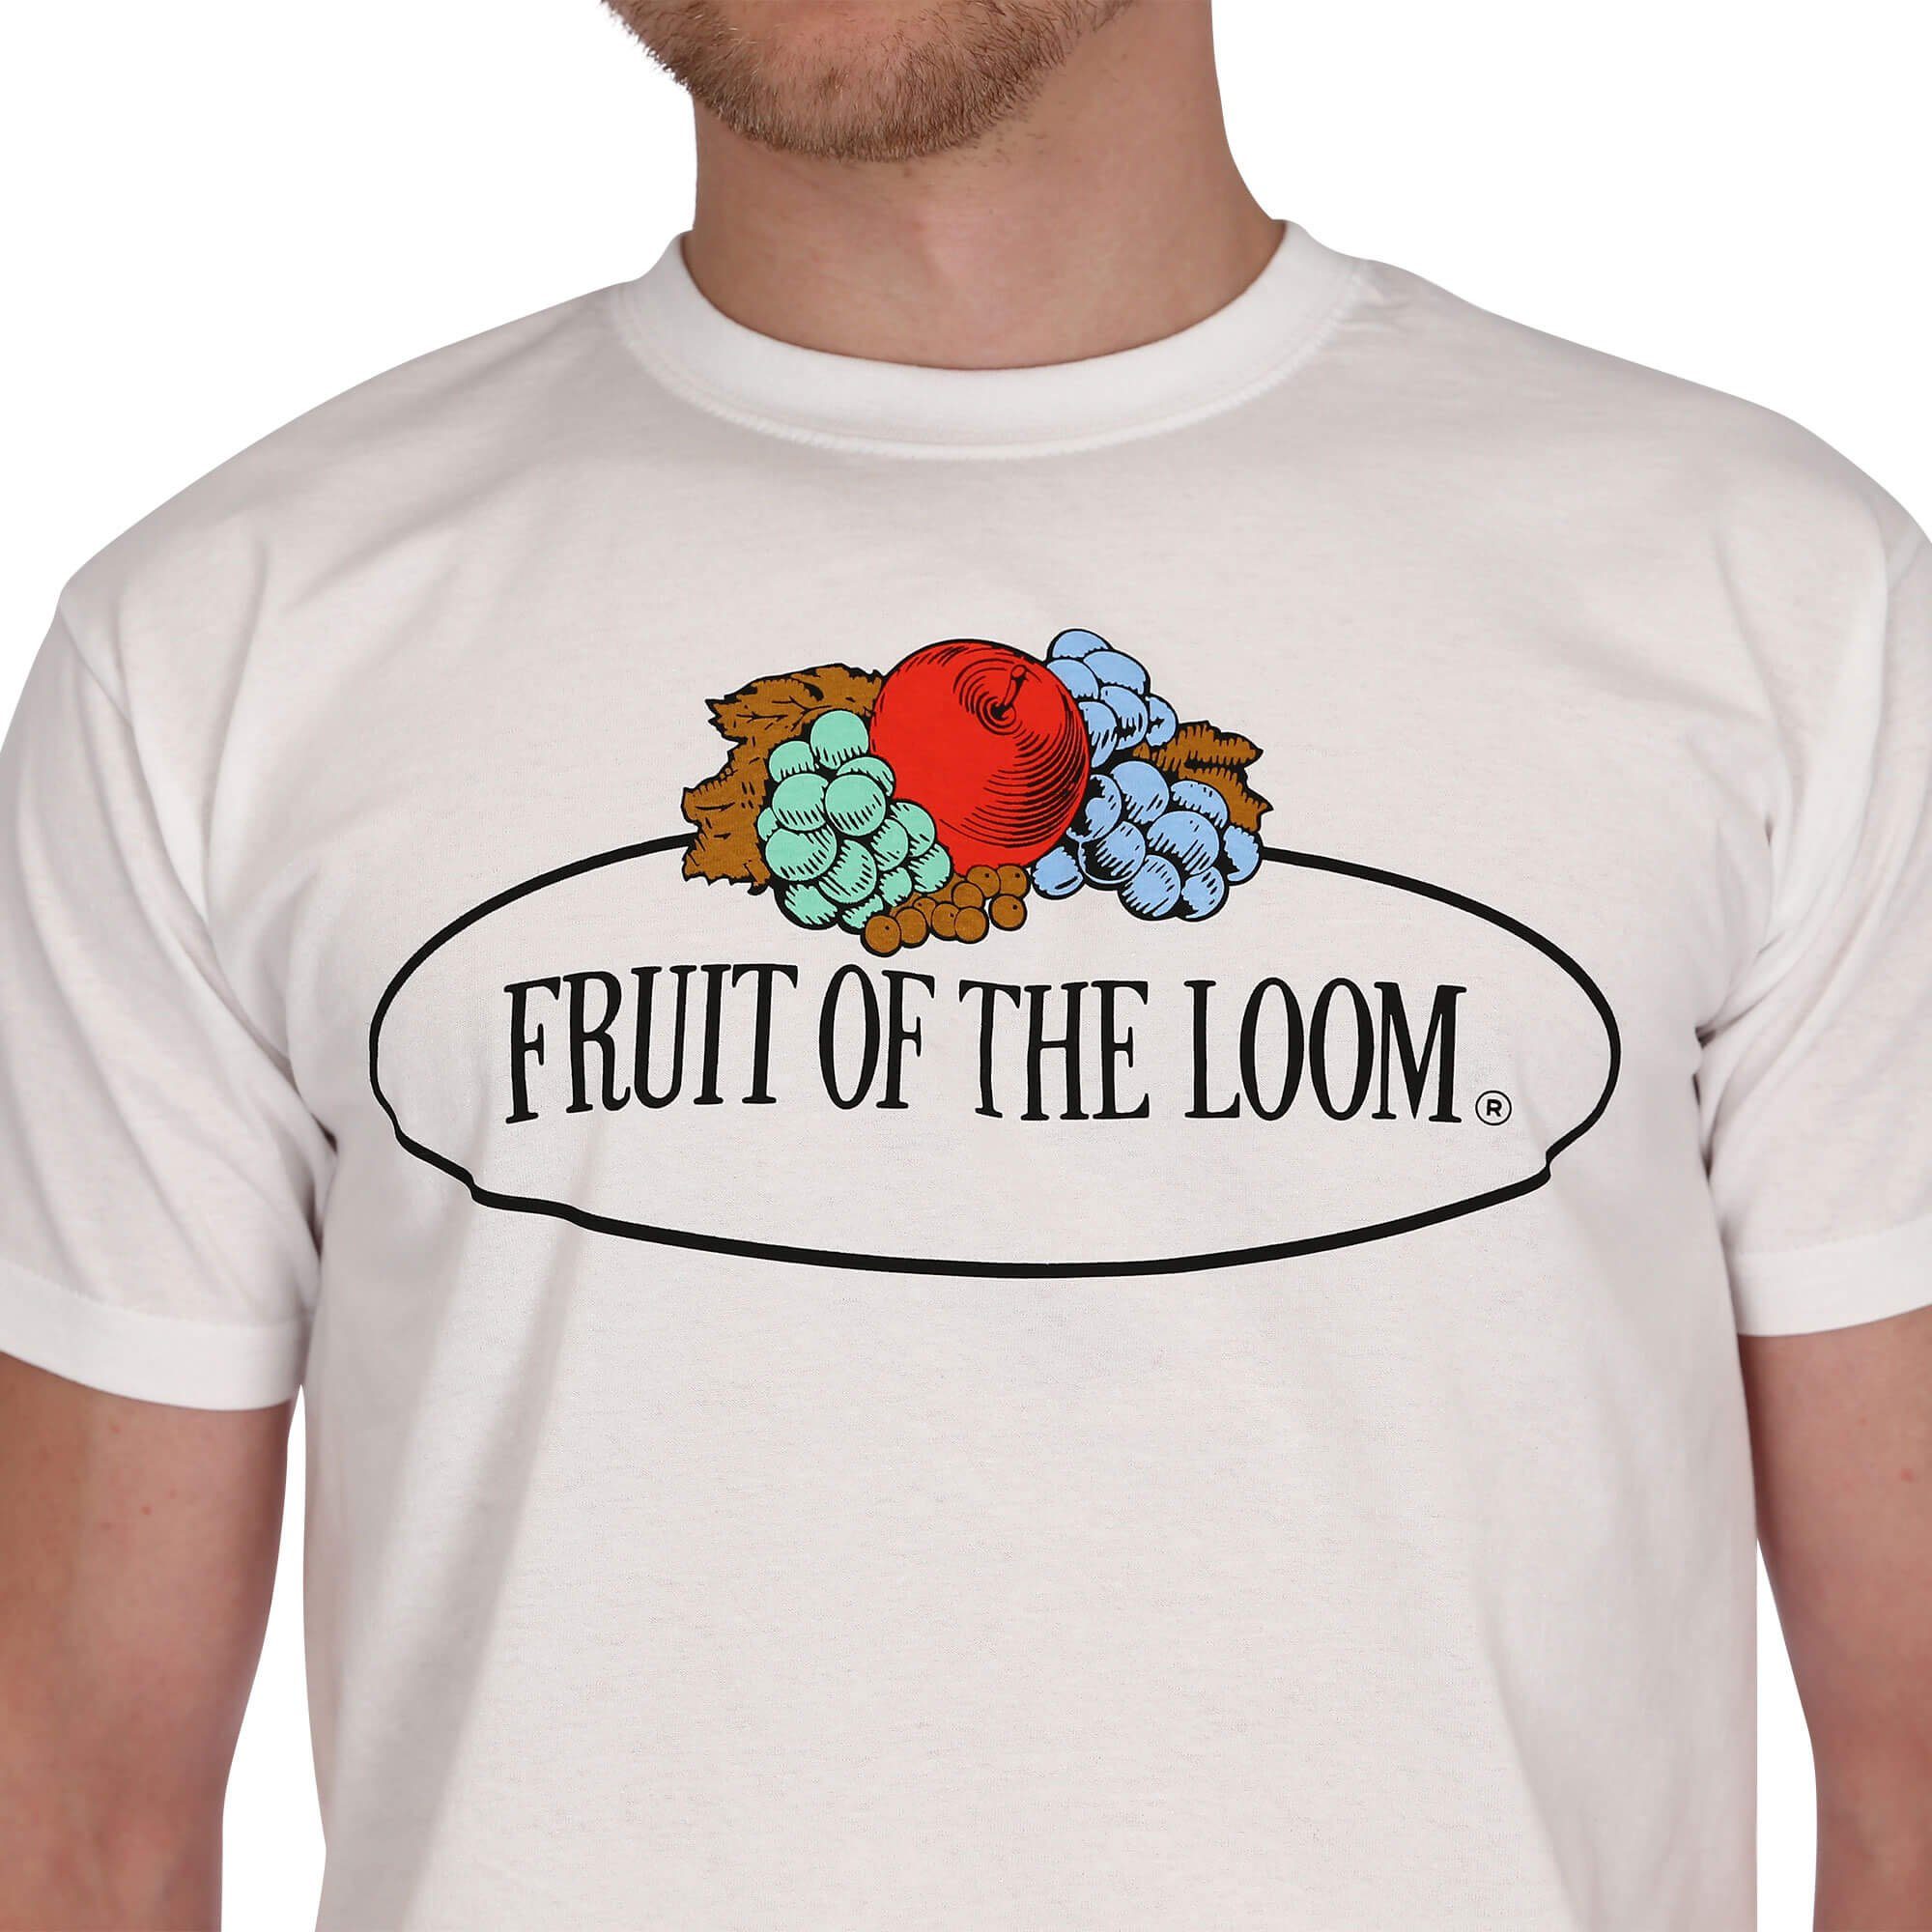 Vintage-Logo - 150 Loom T-Shirt weiß Rundhalsshirt Fruit the of Iconic groß